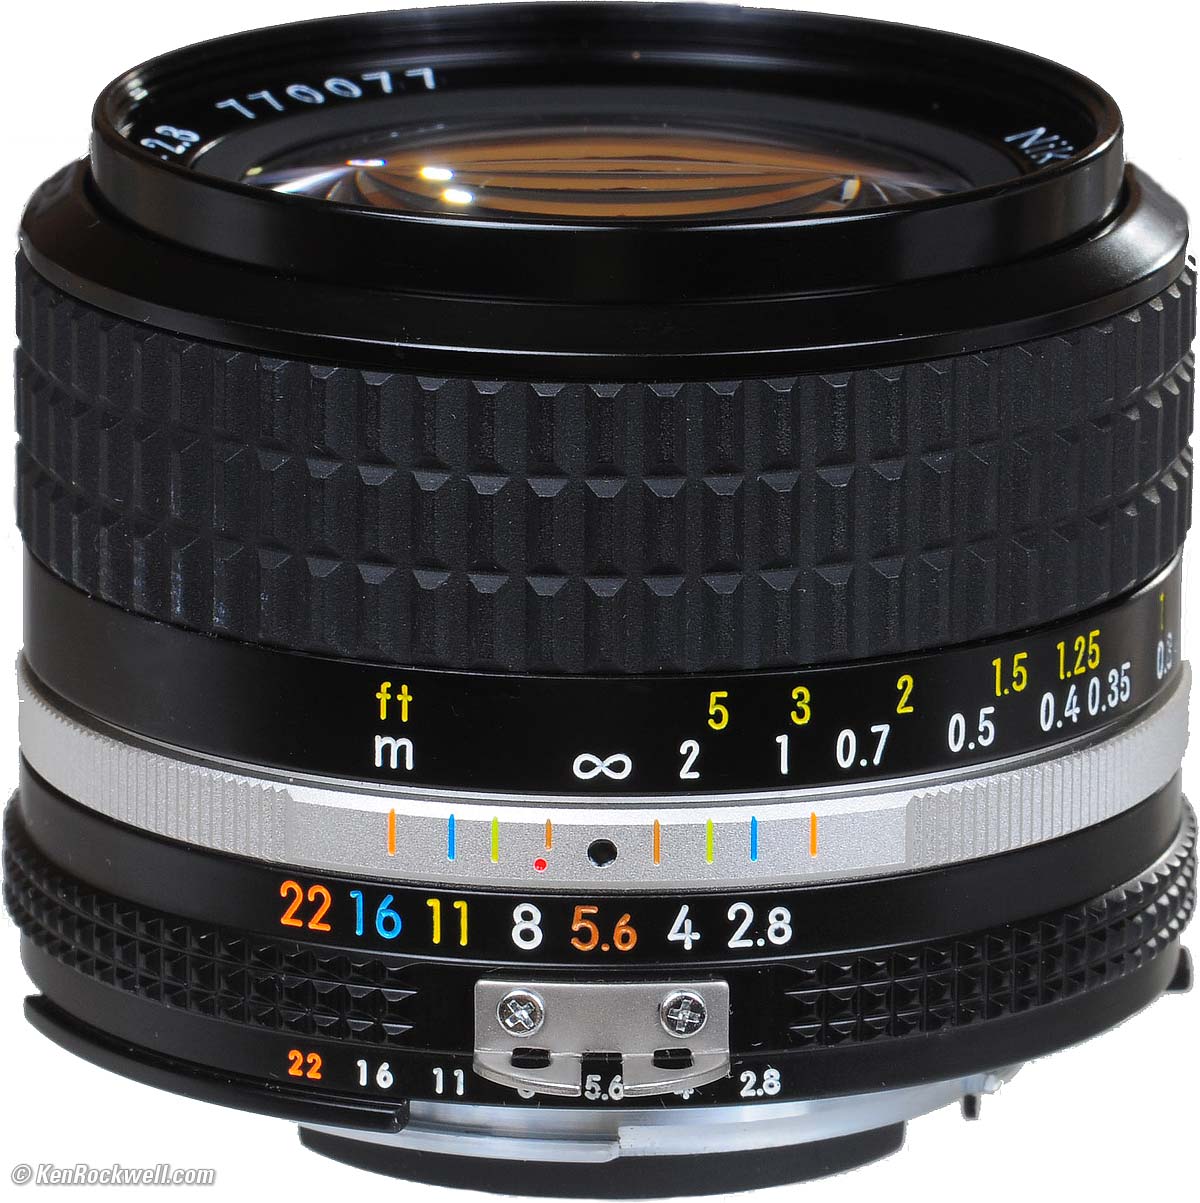 【広角 単焦点】 Nikon Ai-s 24mm F2.8